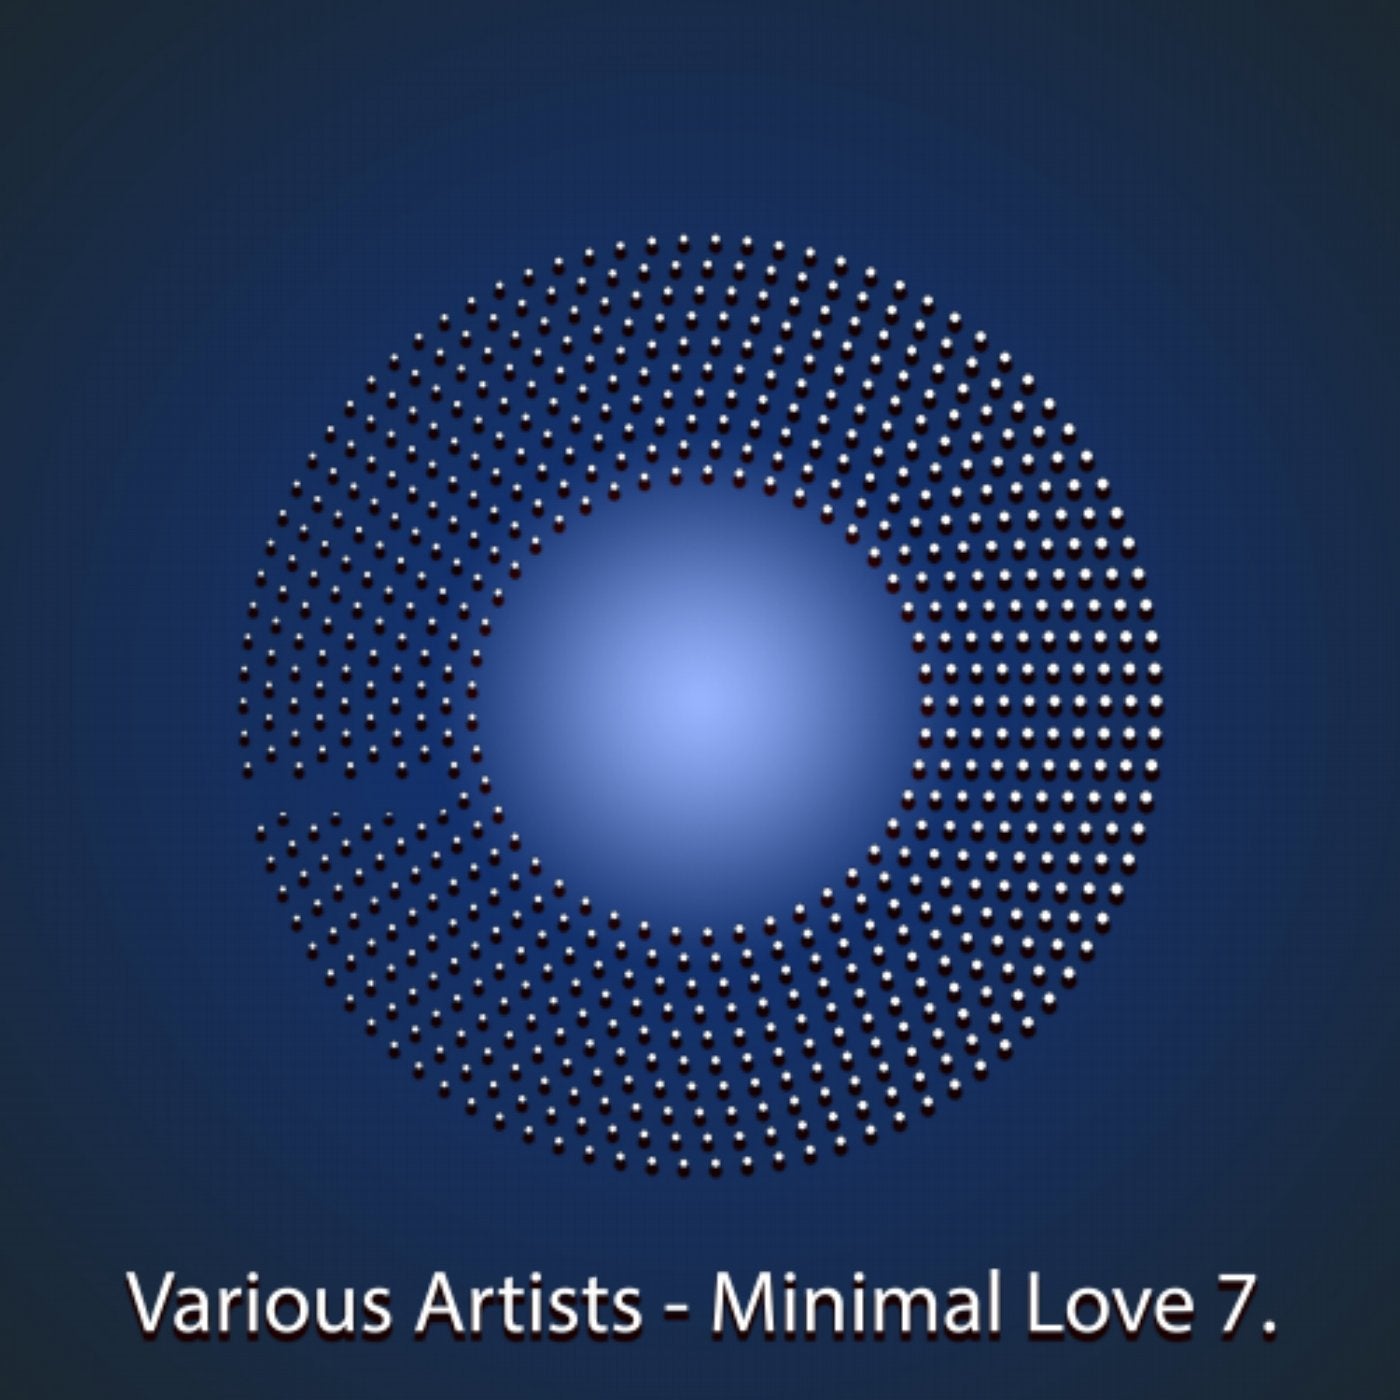 Minimal Love Vol. 7